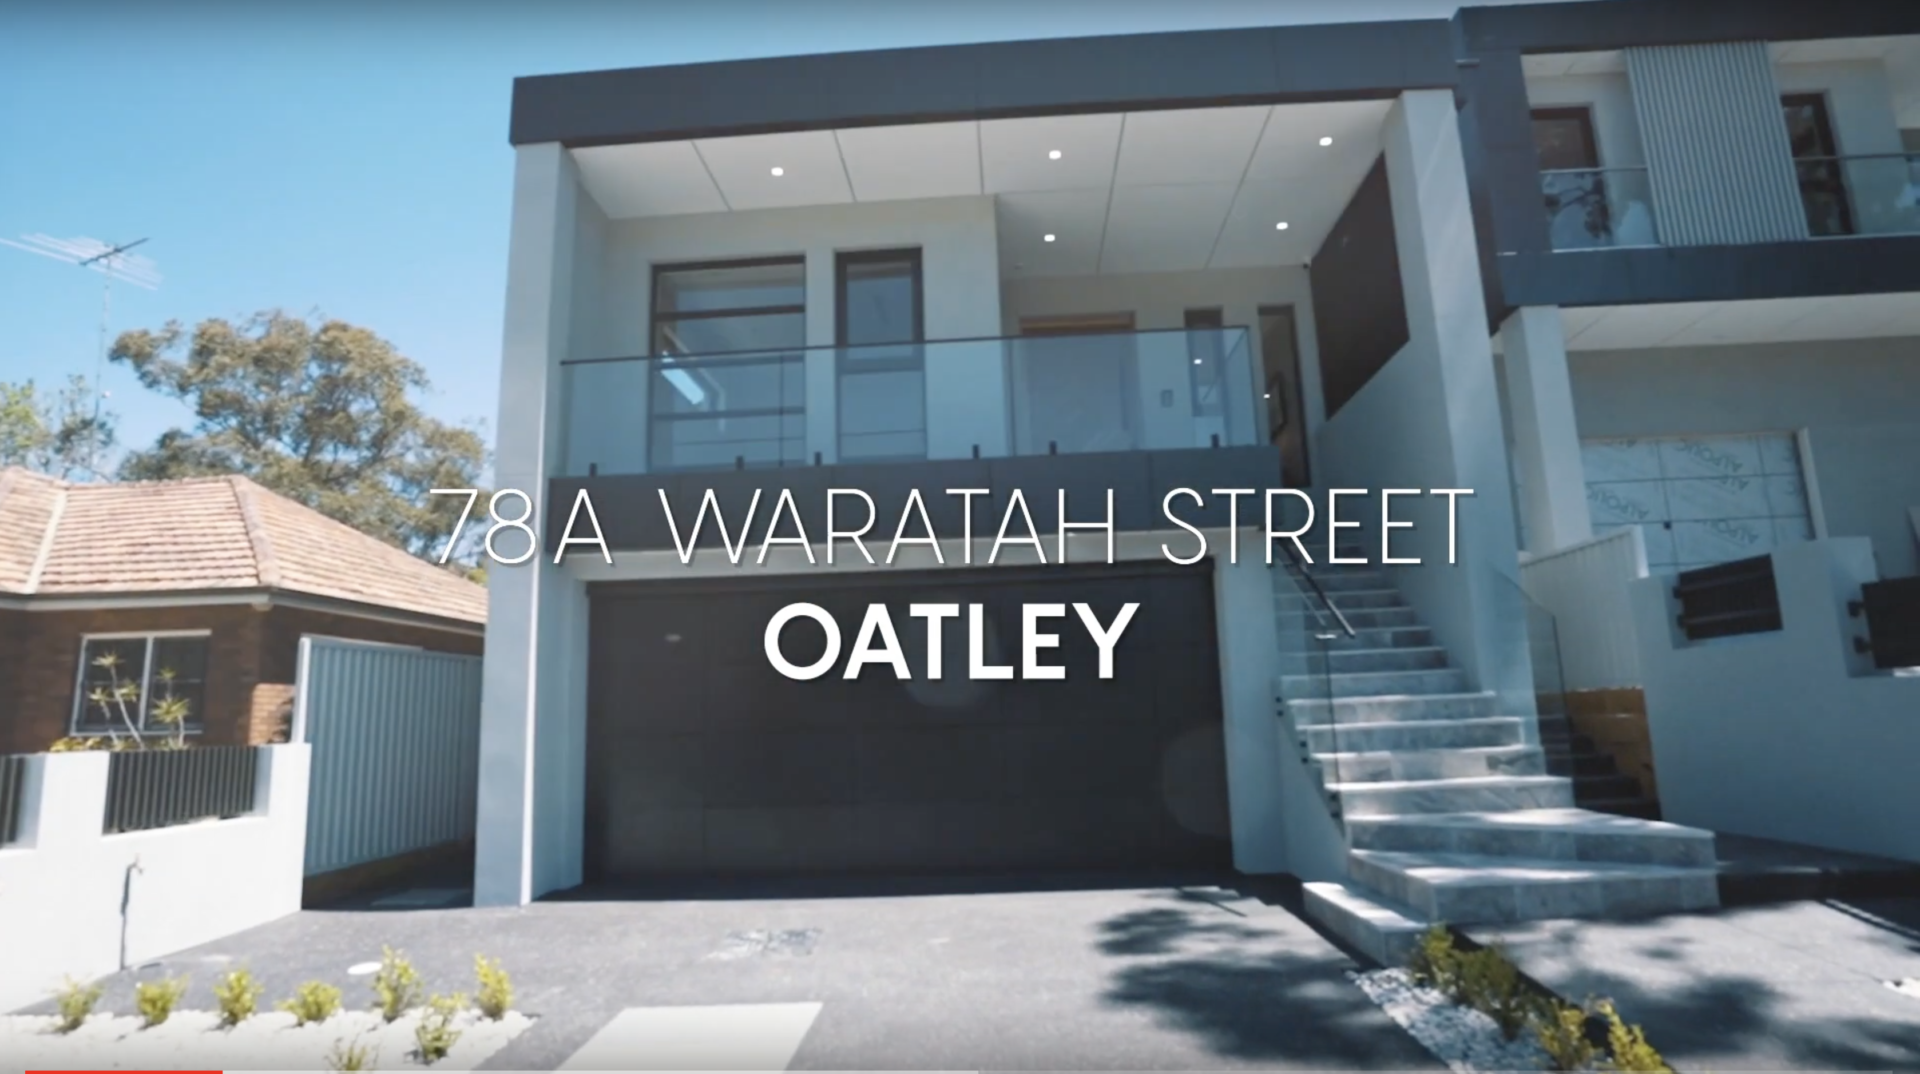 Waratah street Oatley luxury new build real estate Sydney